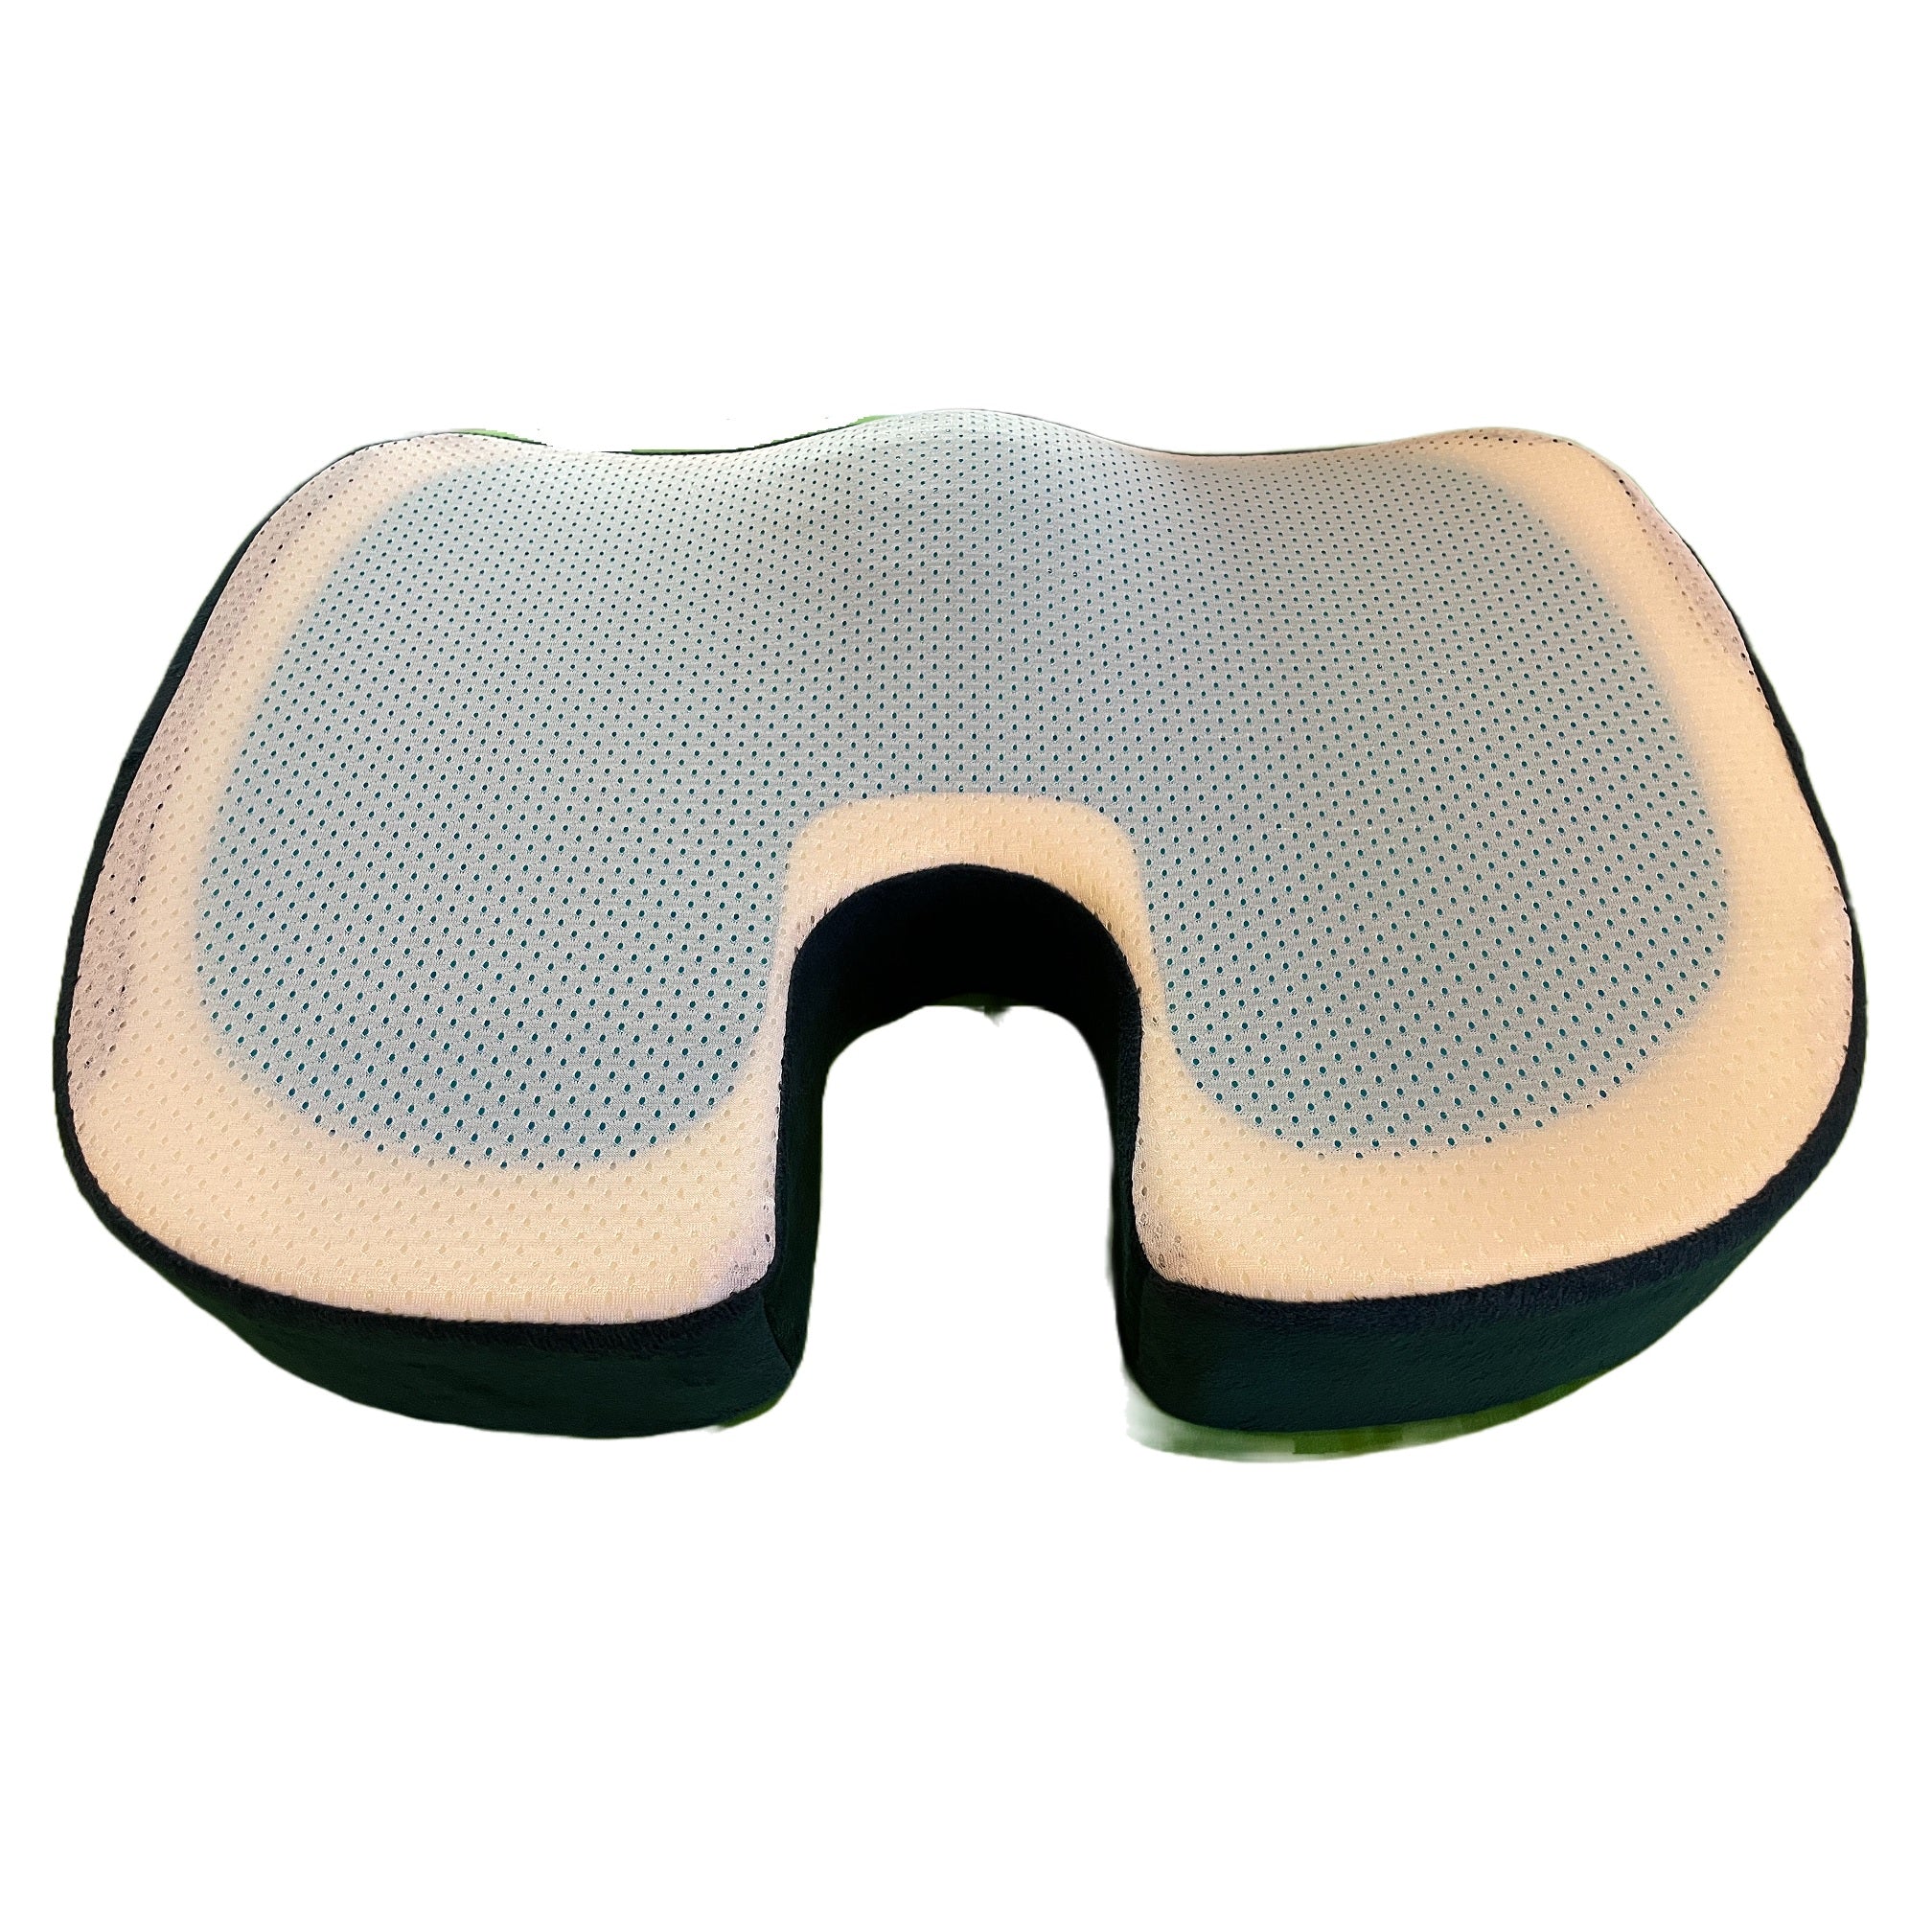 no pressure co™ Premium 100% Gel Cushion Set - Extra Large Wide Gel Seat &  Gel Lumbar Support Pillow - Pressure Relief Long Sitting Pain Sciatica - No